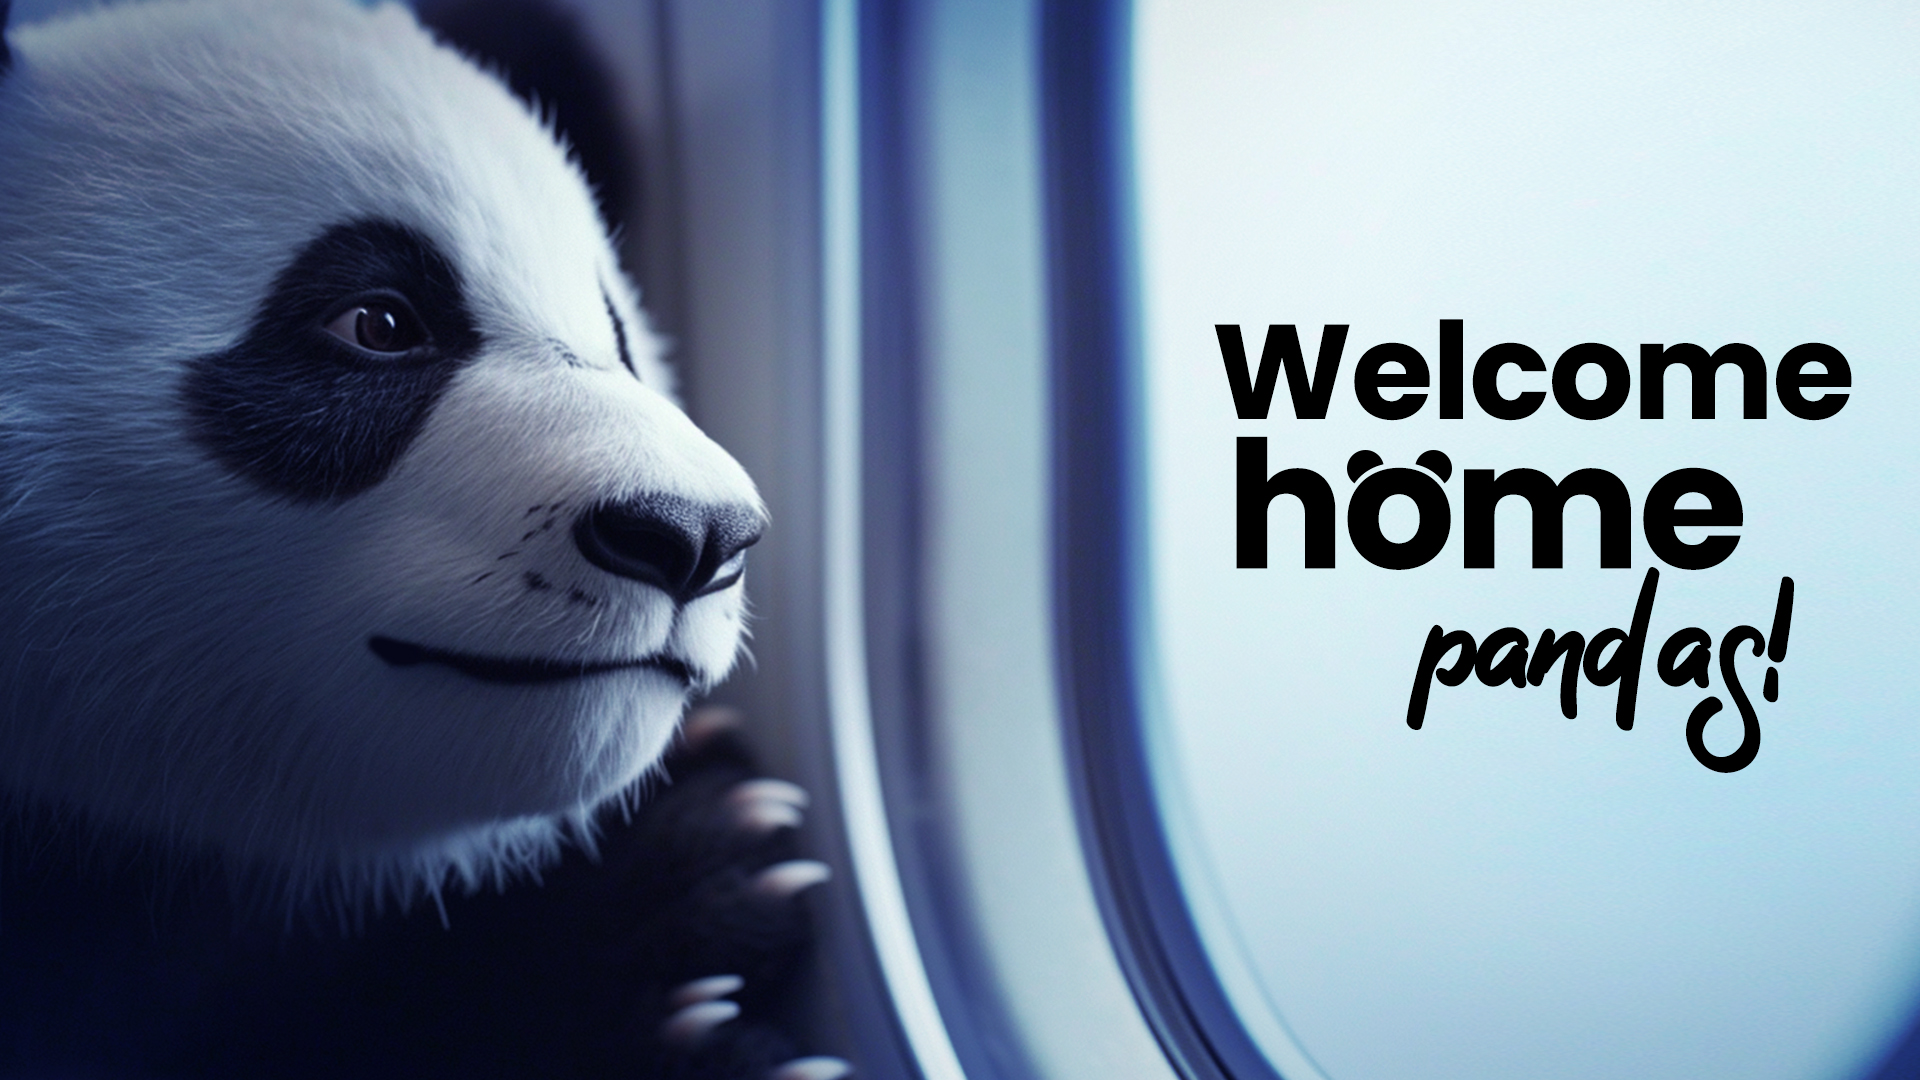 Welcome home, pandas!